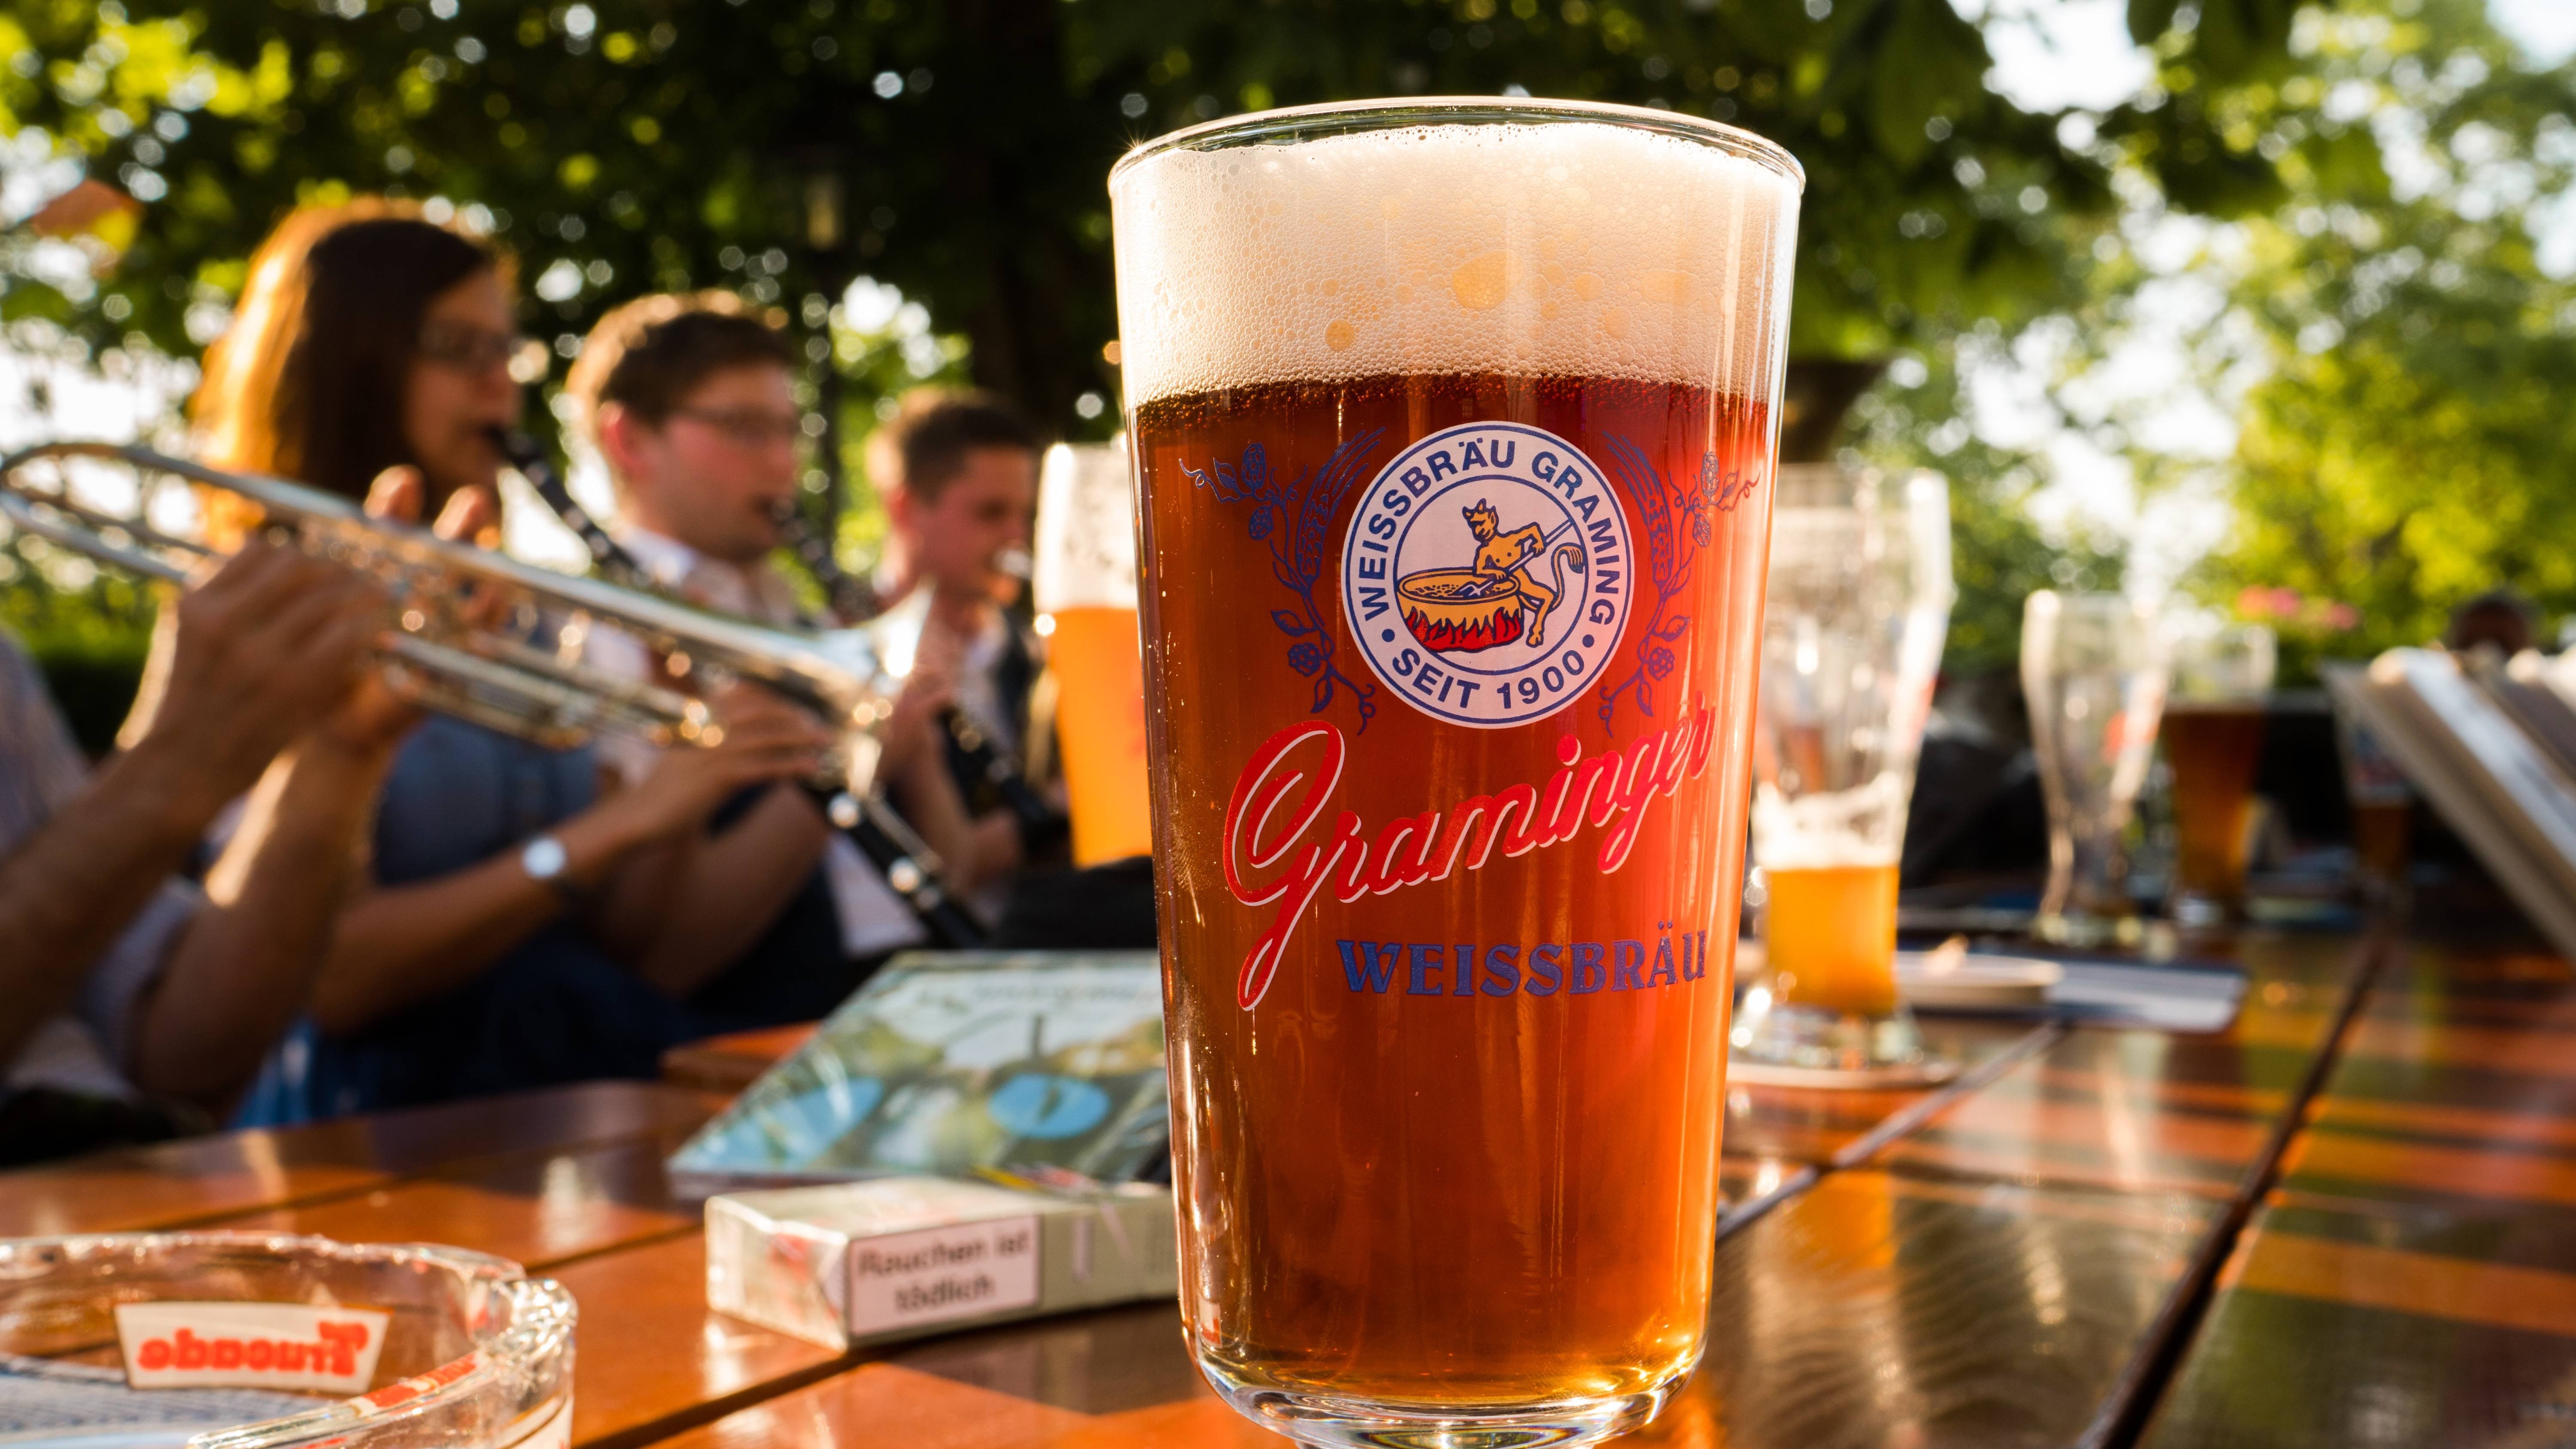 Graminger Weißbräu brewery from Germany